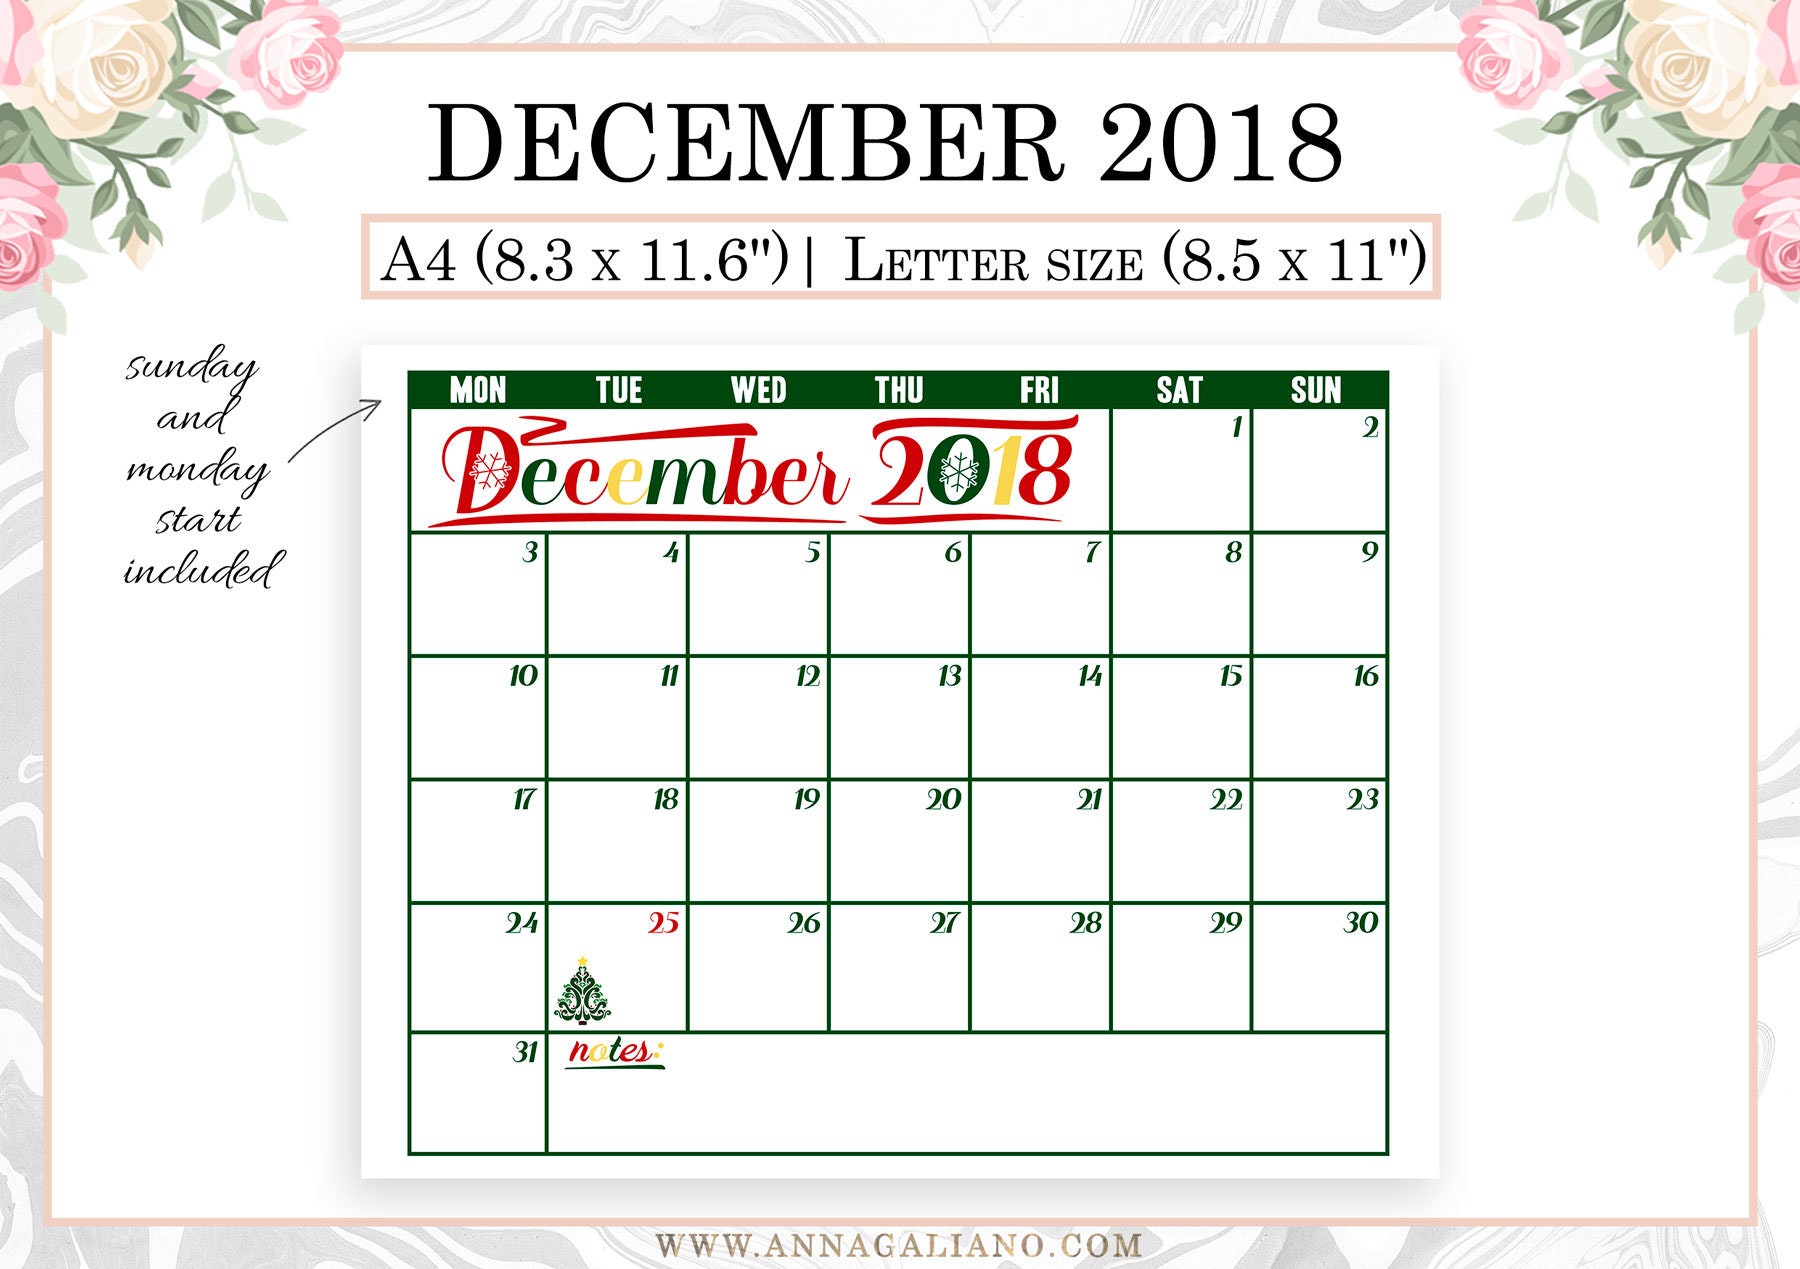 December Public Holidays 2018 Calendar